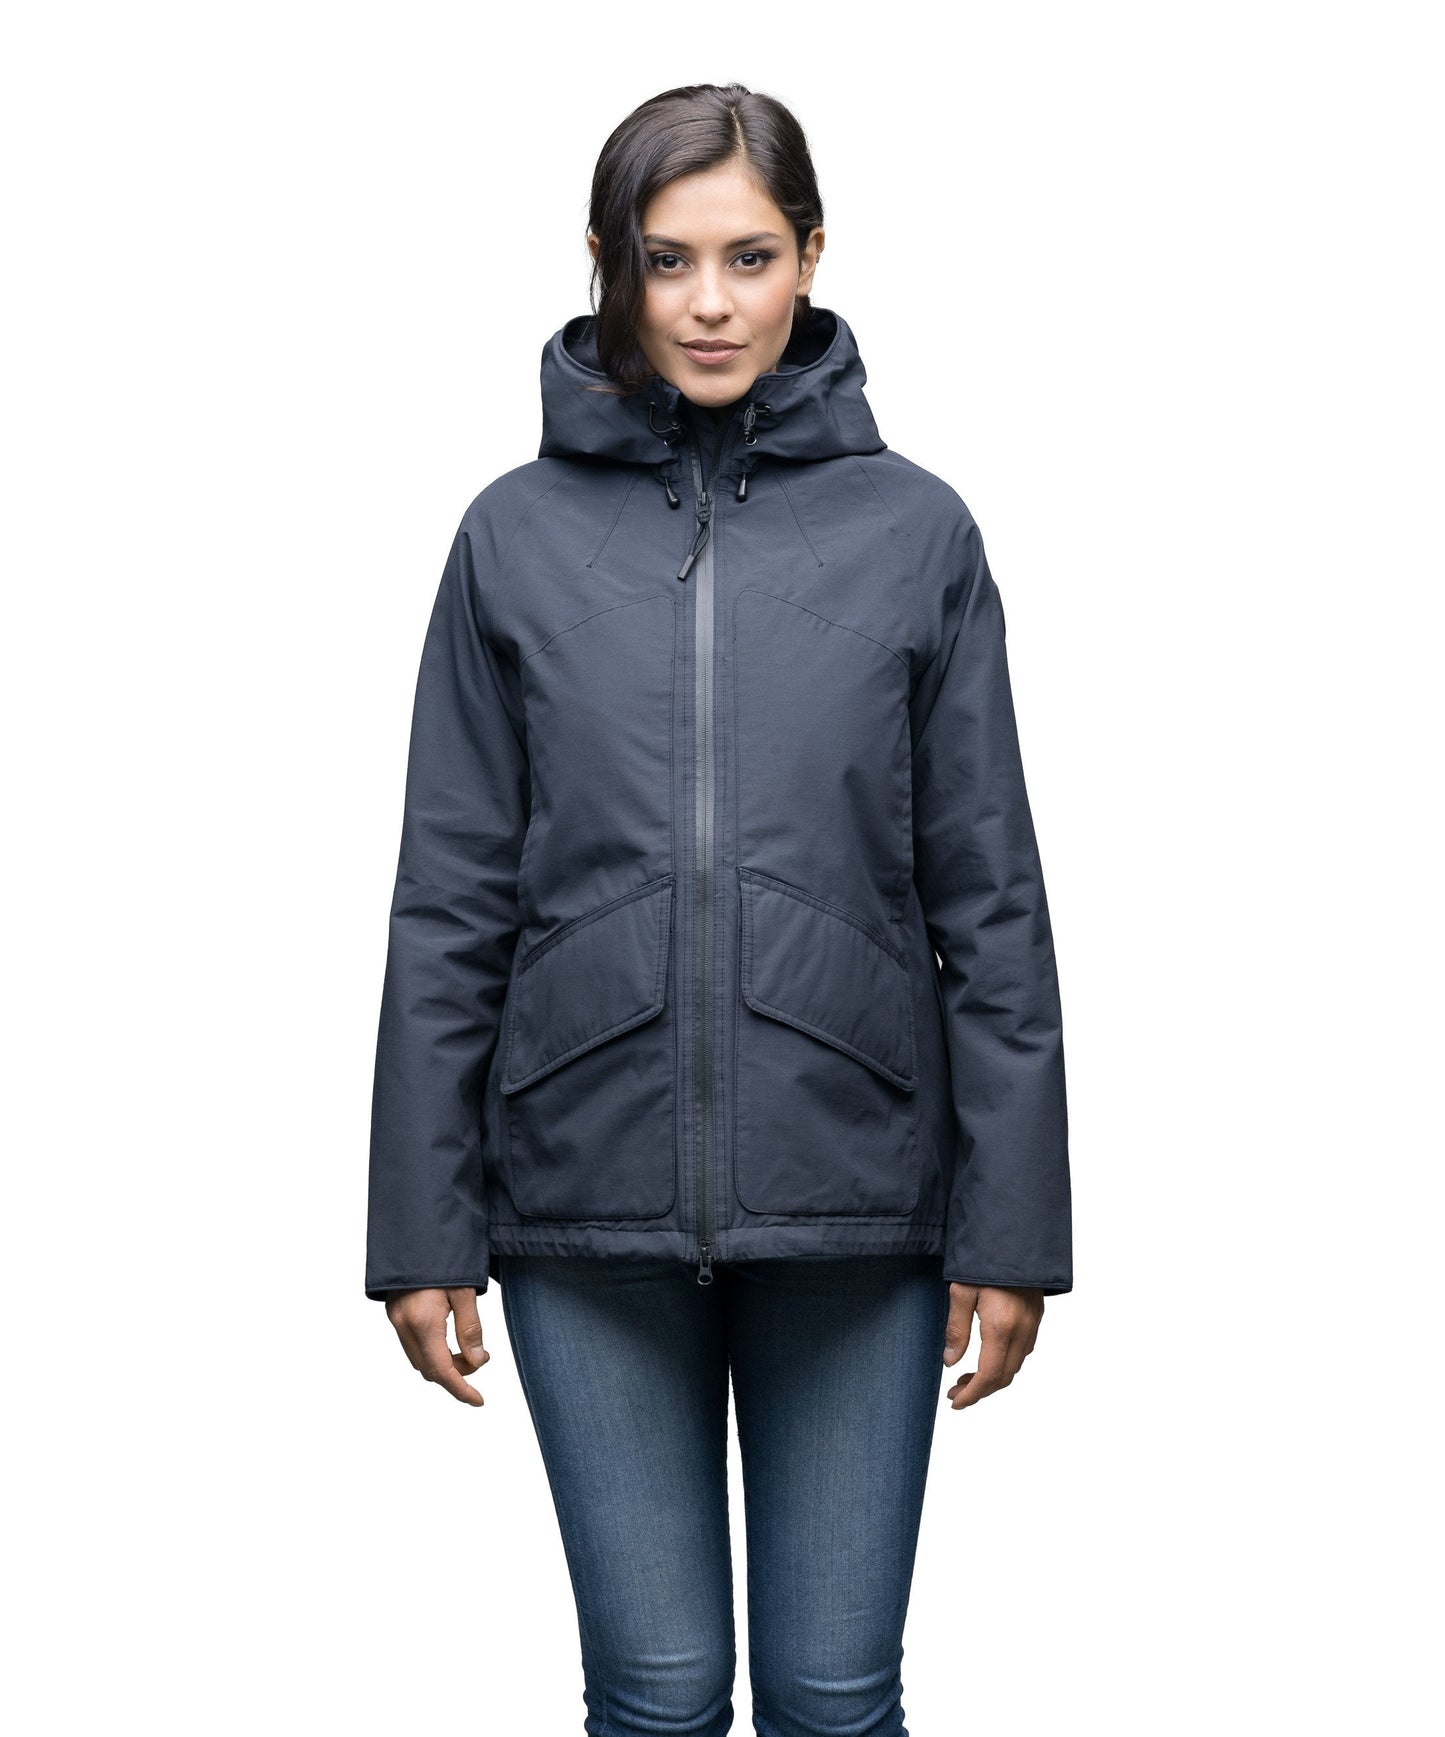 Women's hooded rain jacket with high low hem in Navy